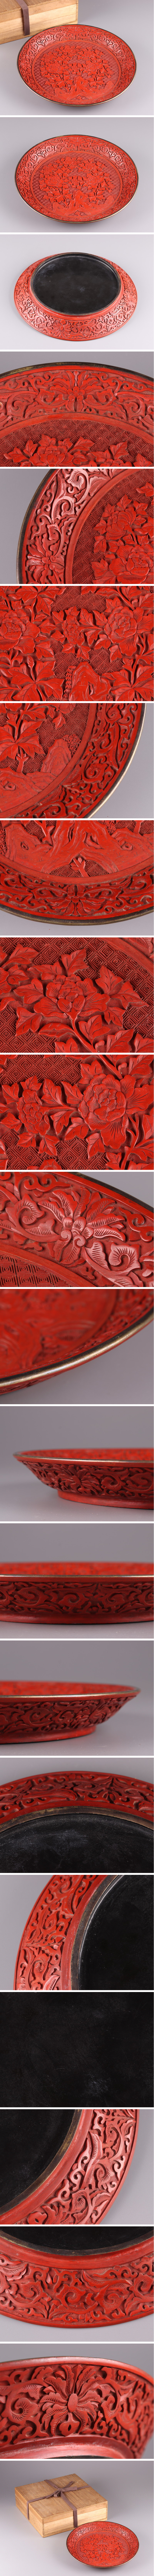 経済制裁中国古玩 唐物 堆朱 銅覆輪 皿 細密細工 時代物 極上品 初だし品 1817 その他